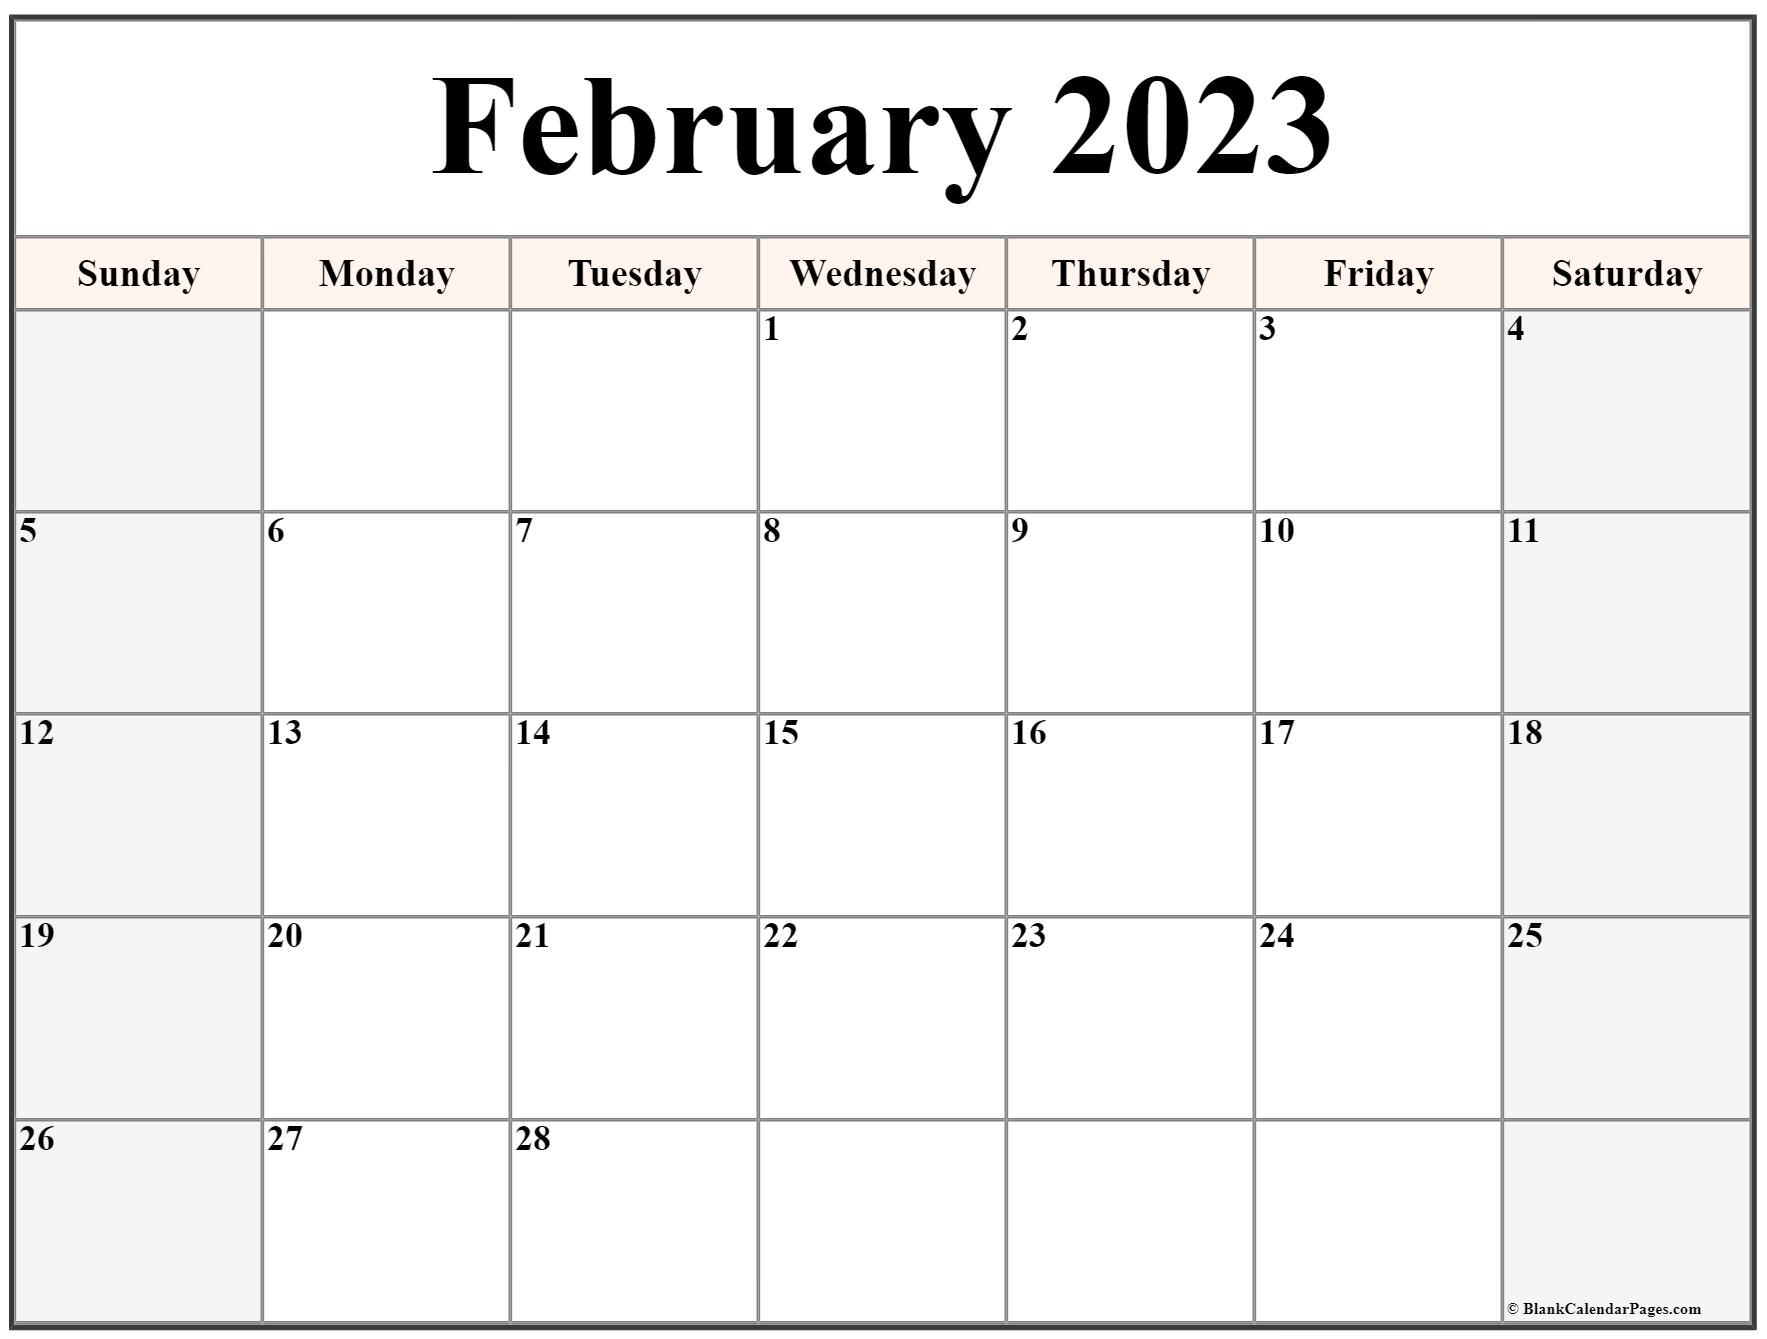 Free Printable Blank February 2023 Calendar 2022 FreeBlankCalendar